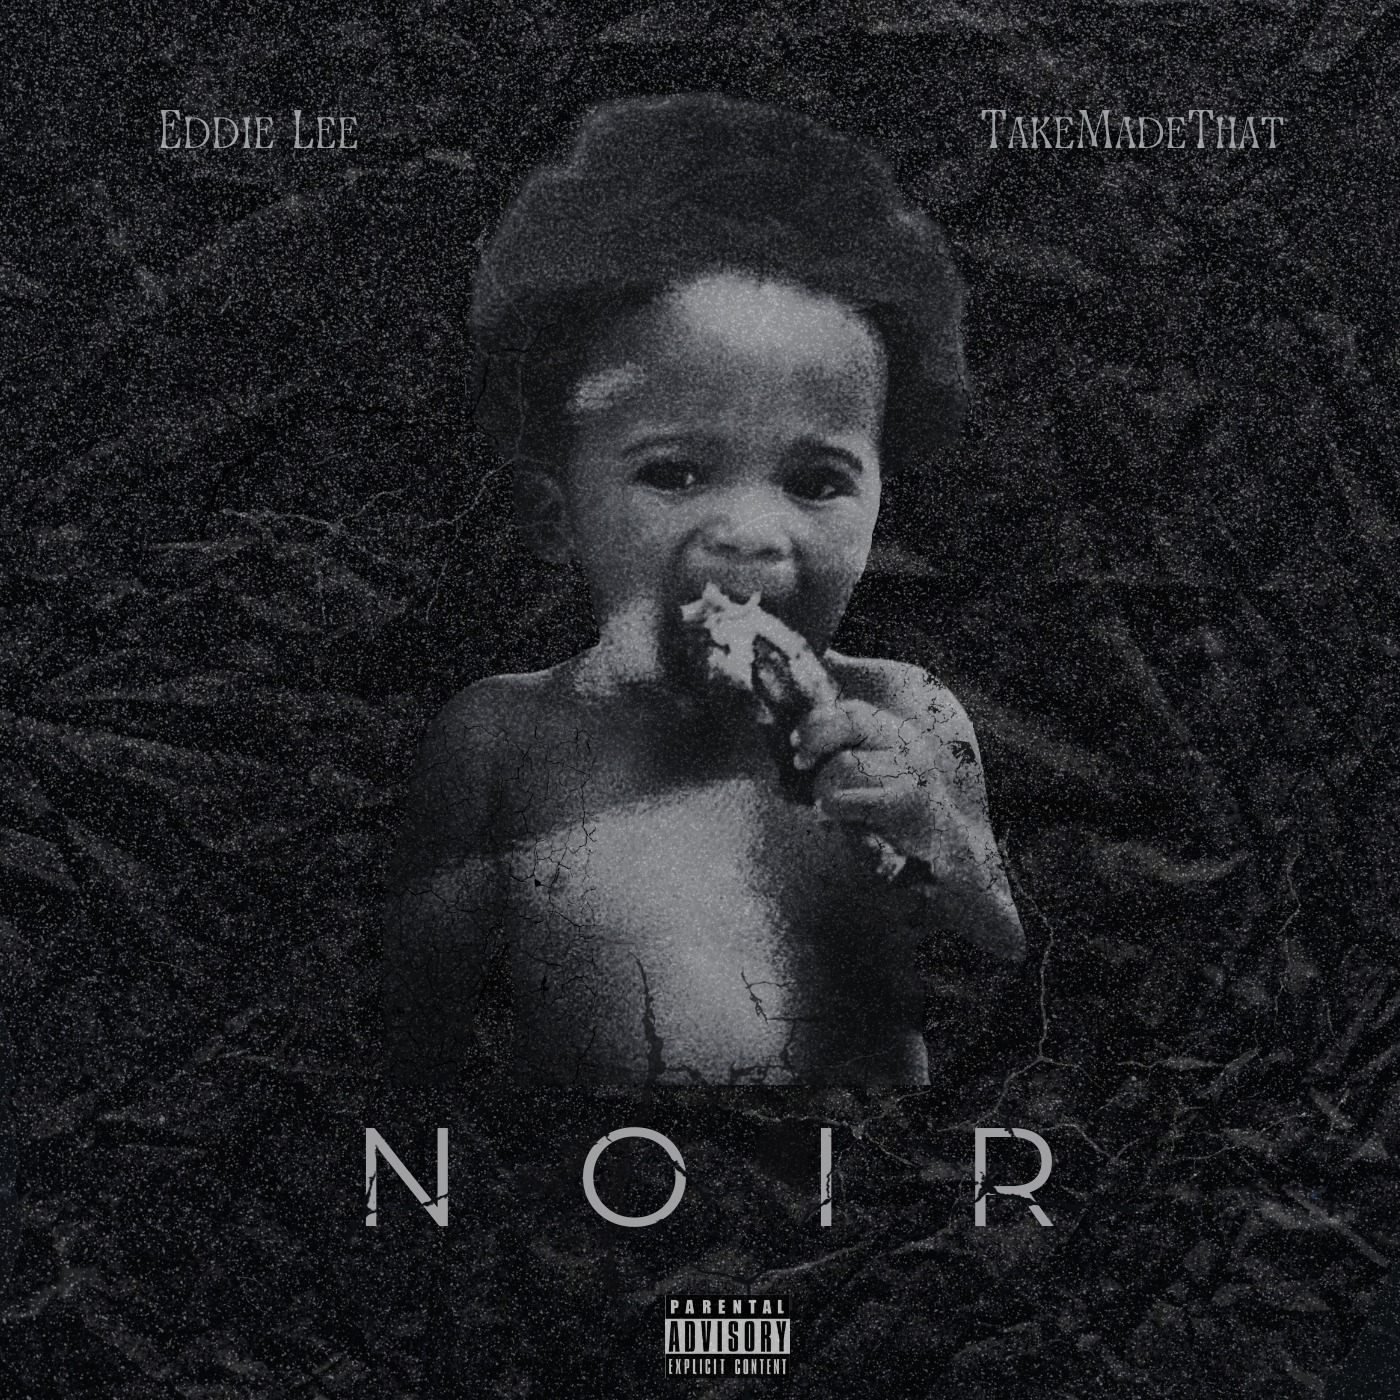 Album Review: "NOIR" - A Triumph of Resilience and Artistic Evolution